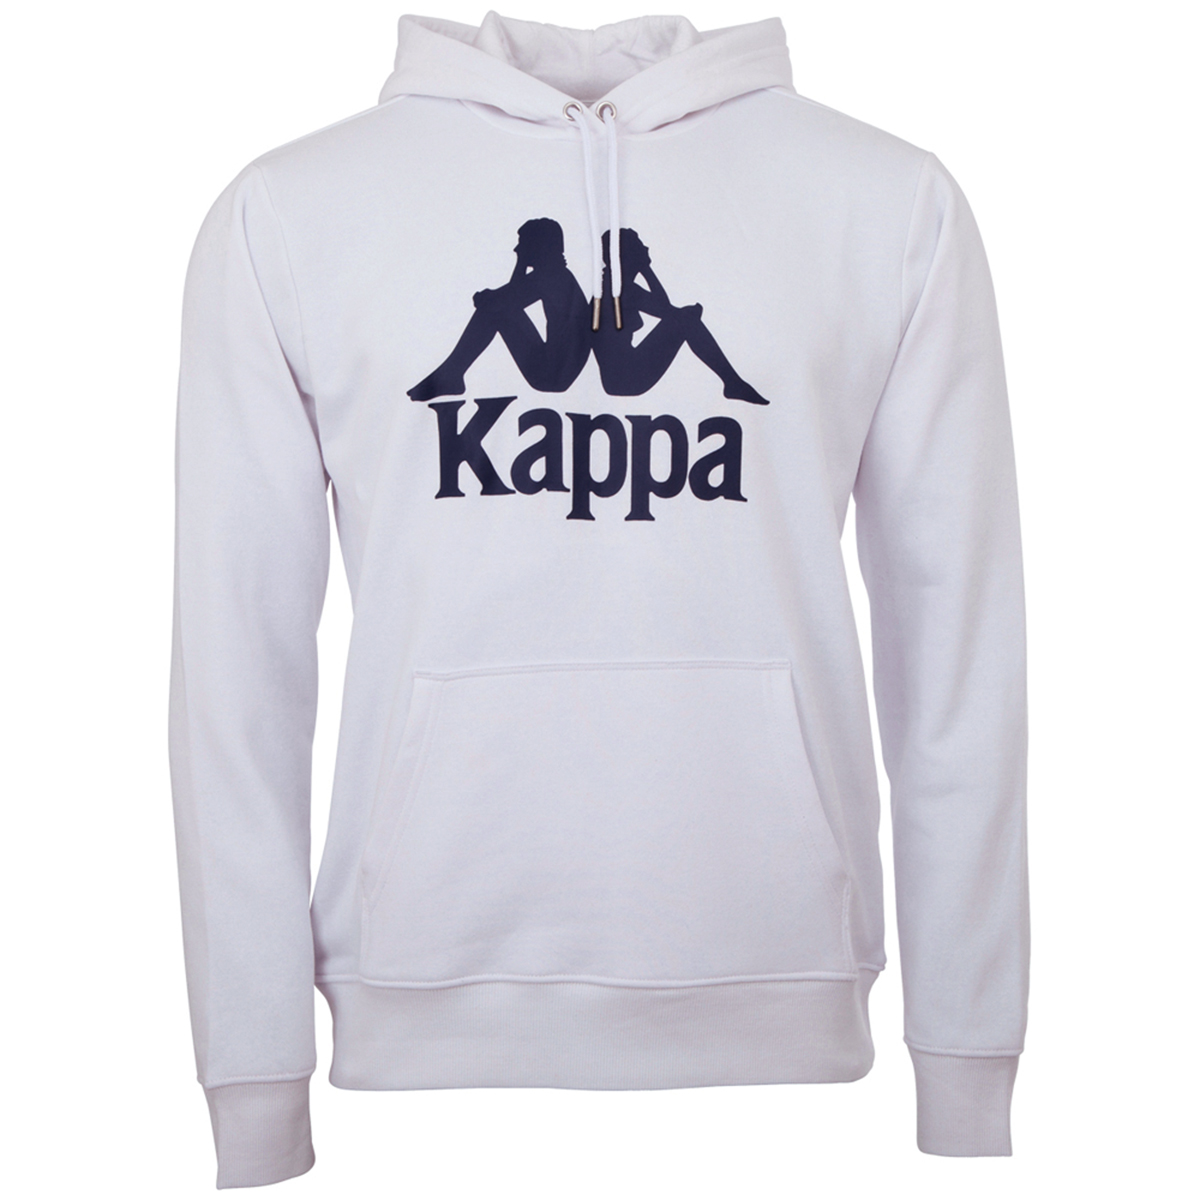 Kappa Unisex Hooded Sweatshirt white 705322 001